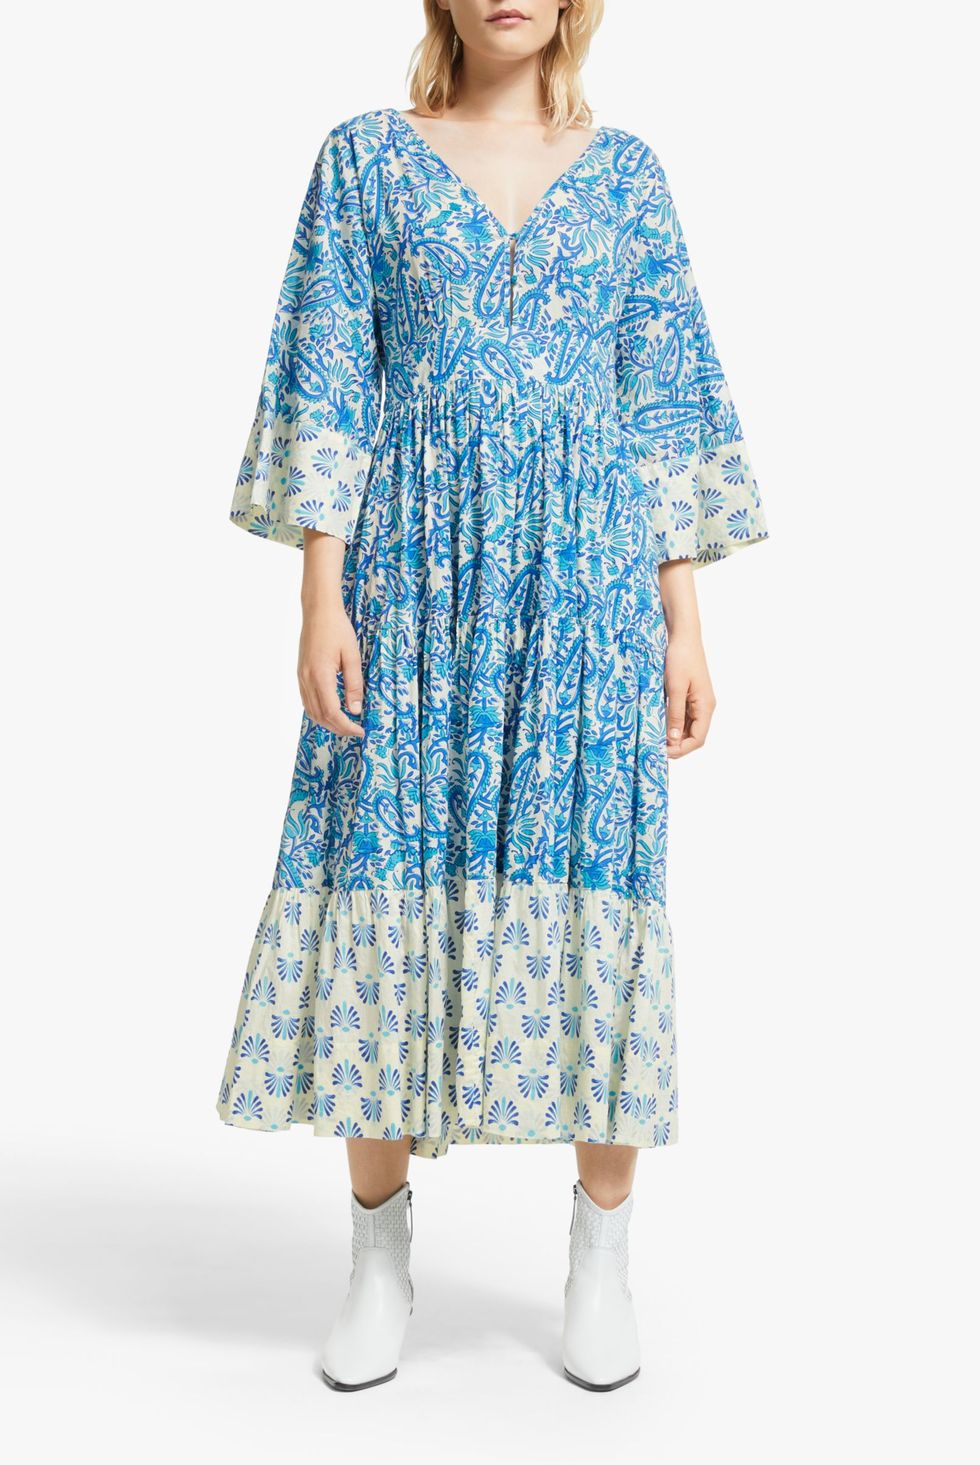 AND/OR La Galeria Elefante Kimono Paisley Print Midi Dress, Blue/Ivory